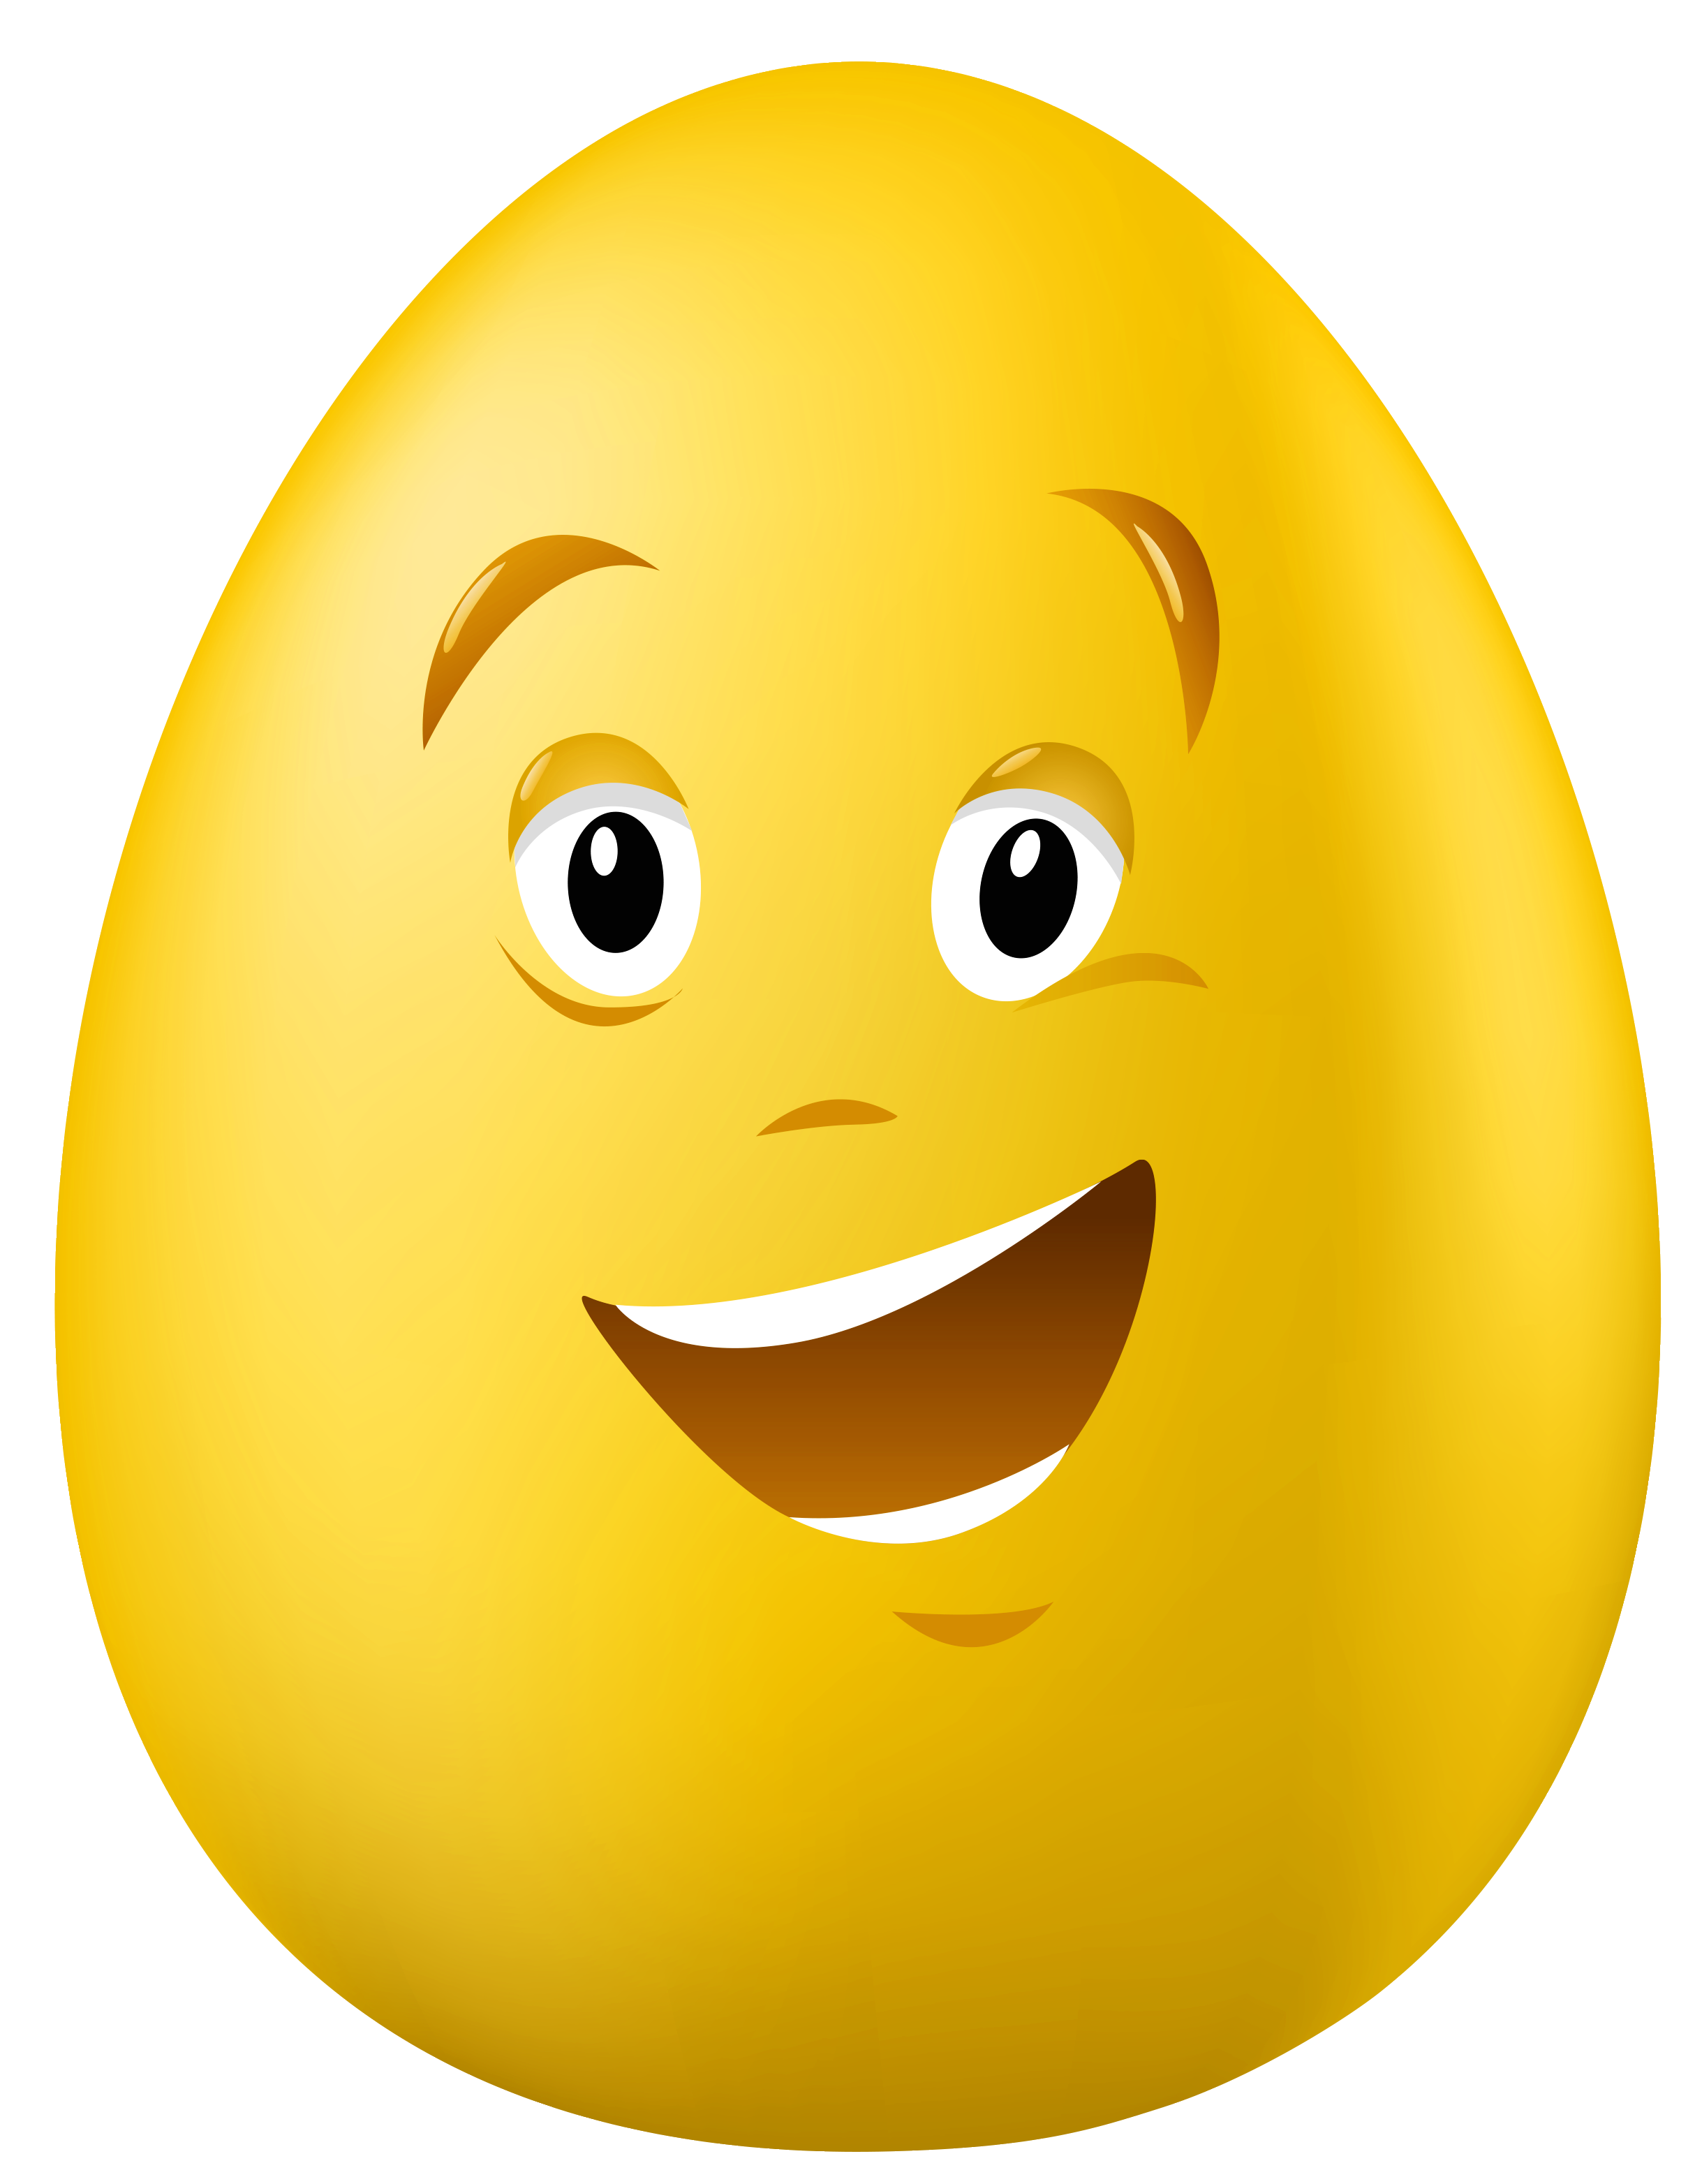 Uovo con faccina sorridente